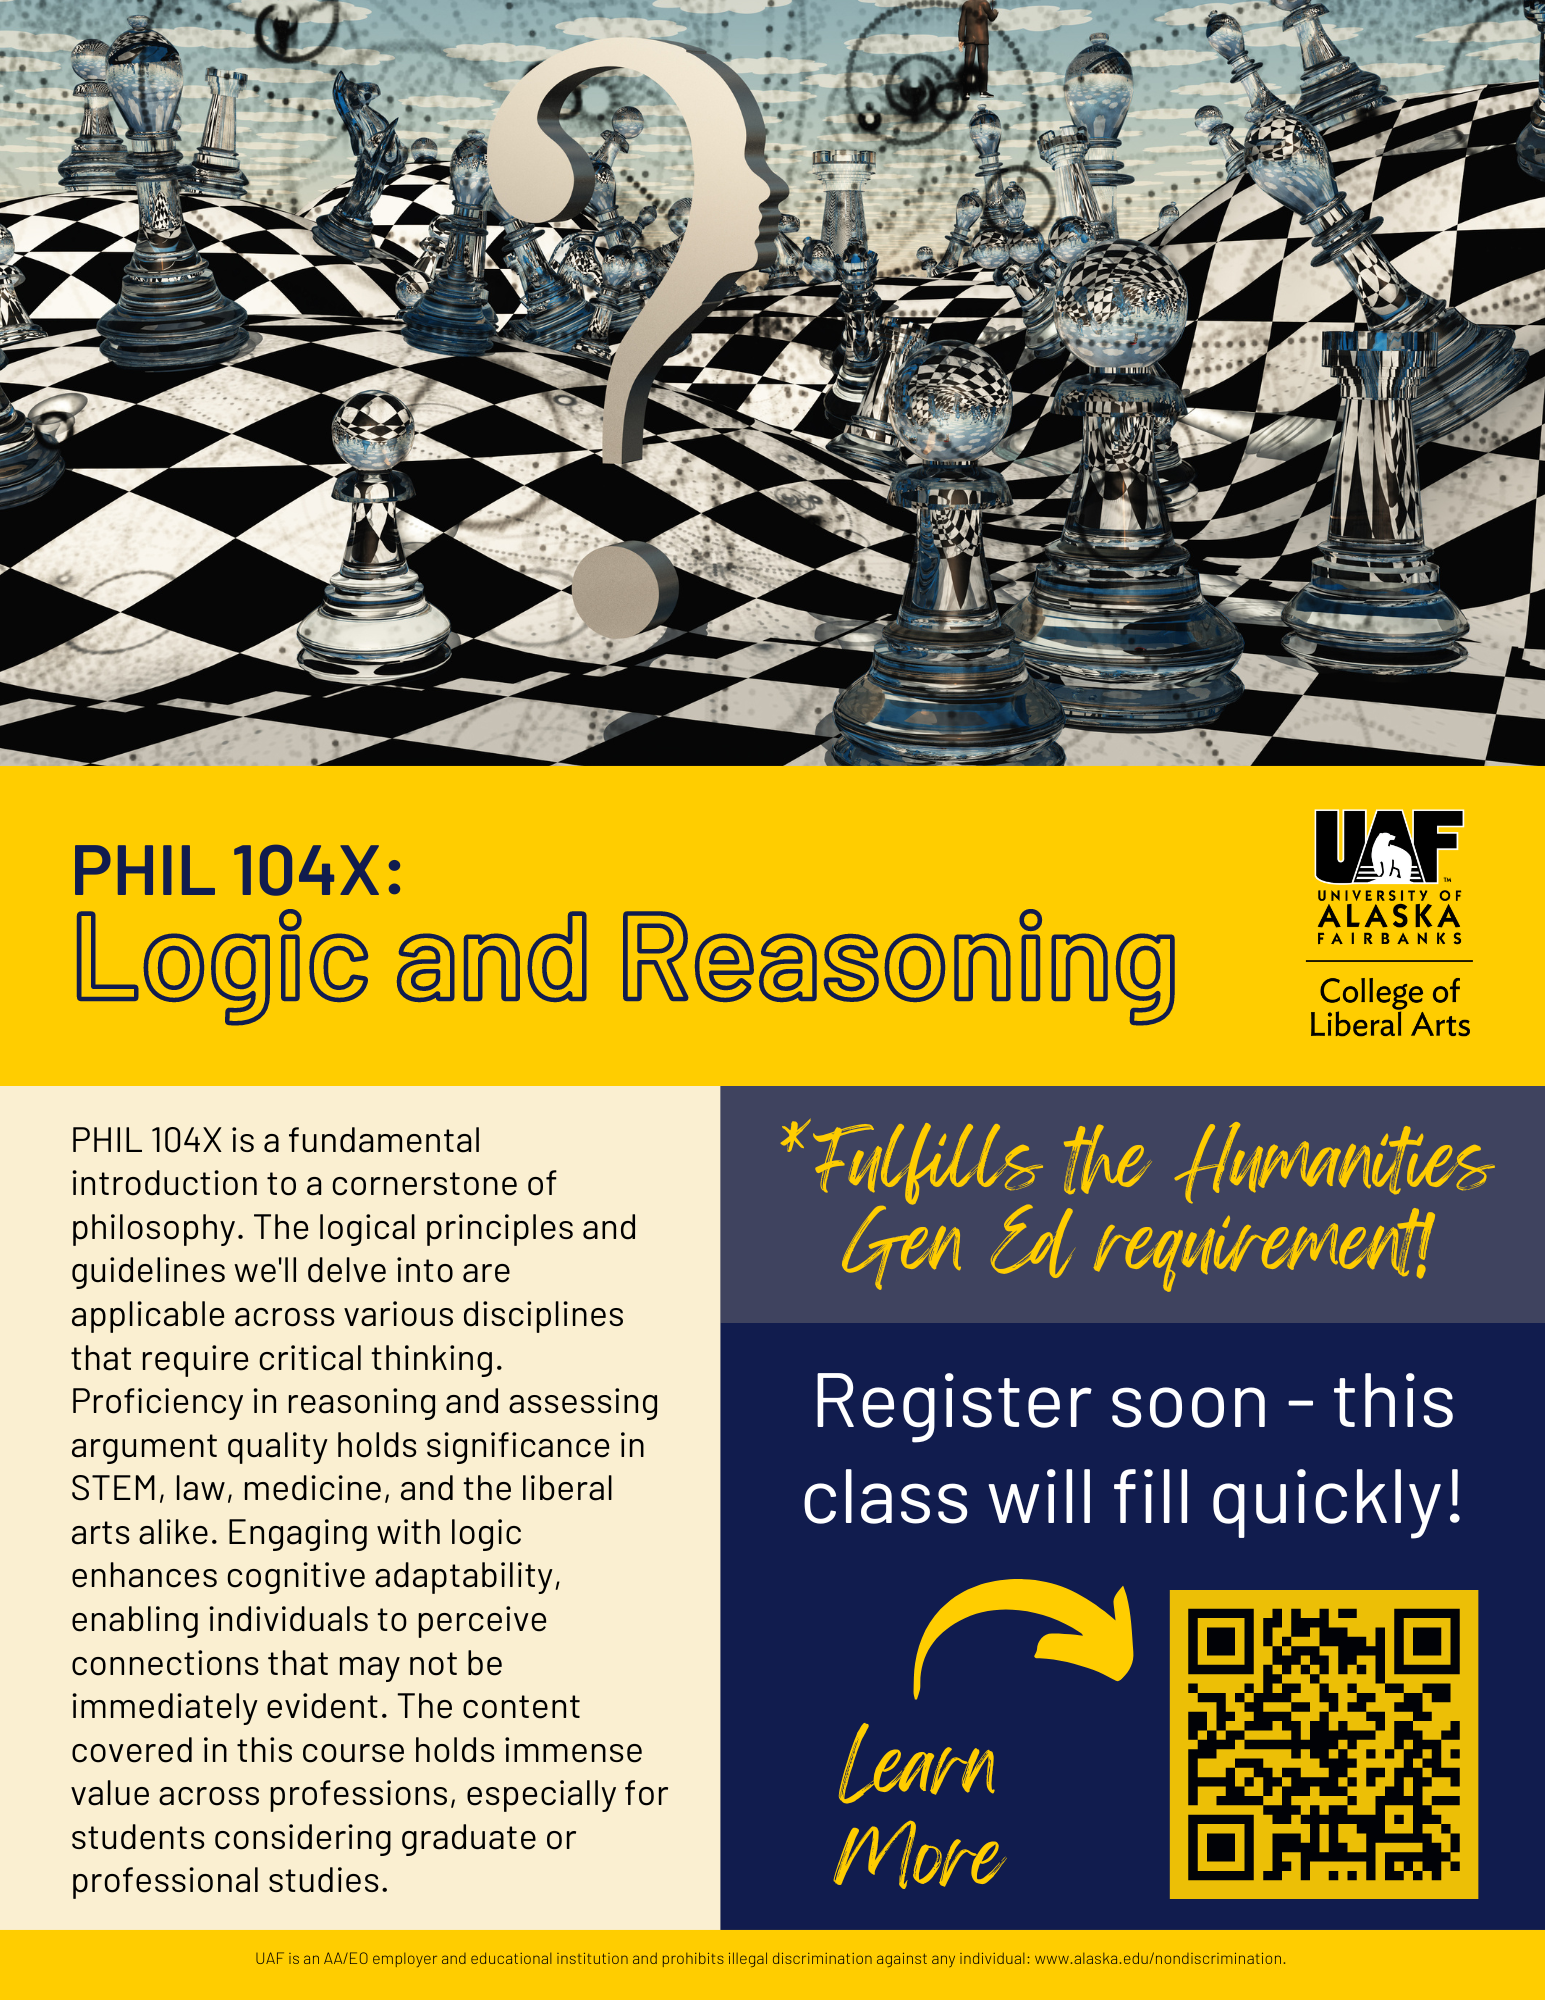 poster advertising PHIL F104X: Logic and Reasoning. UAF image.